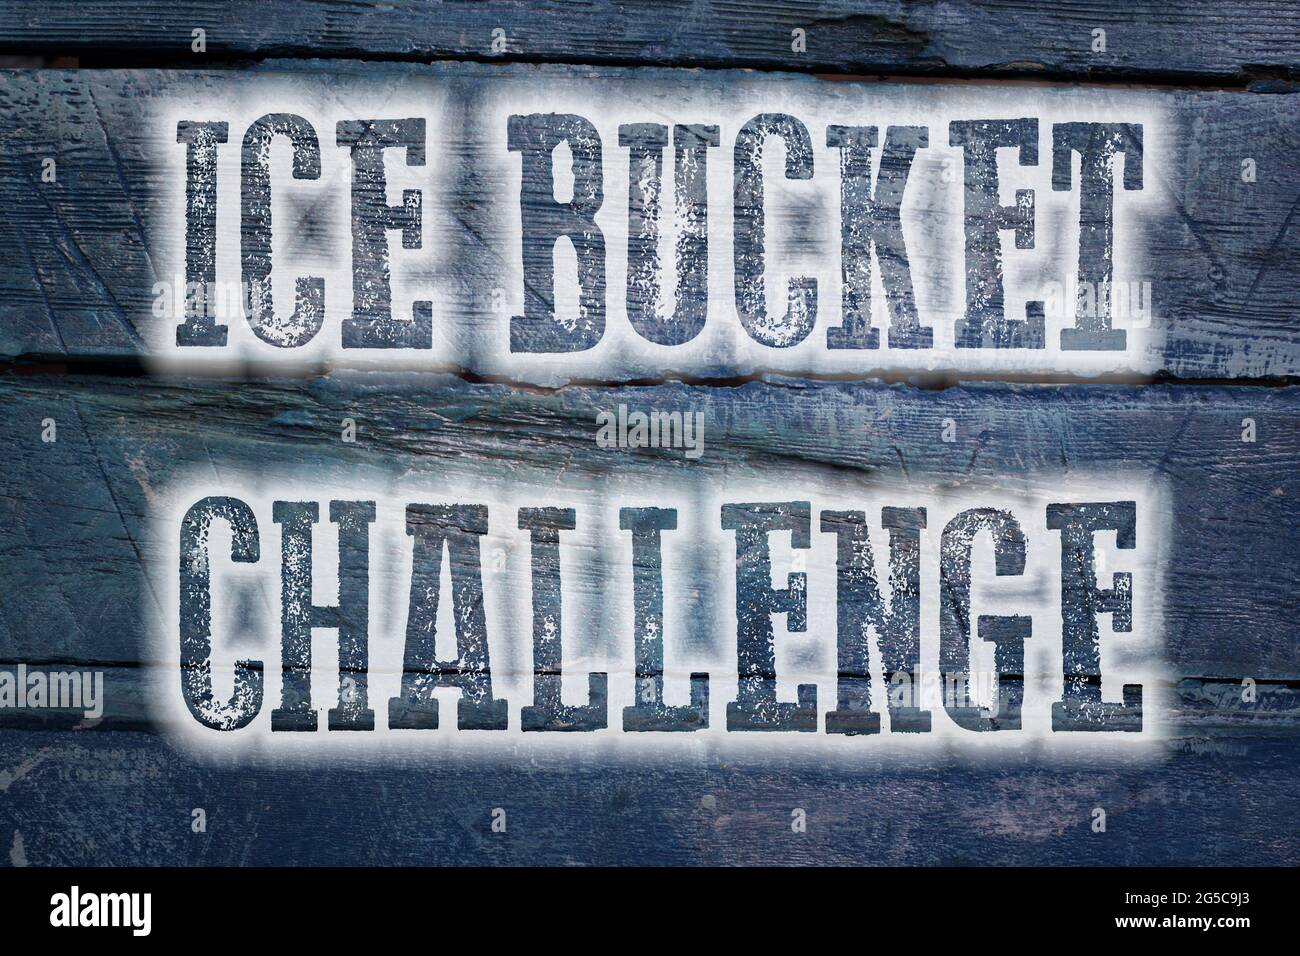 Ice Bucket Challenge Concept text on background Stock Photo - Alamy